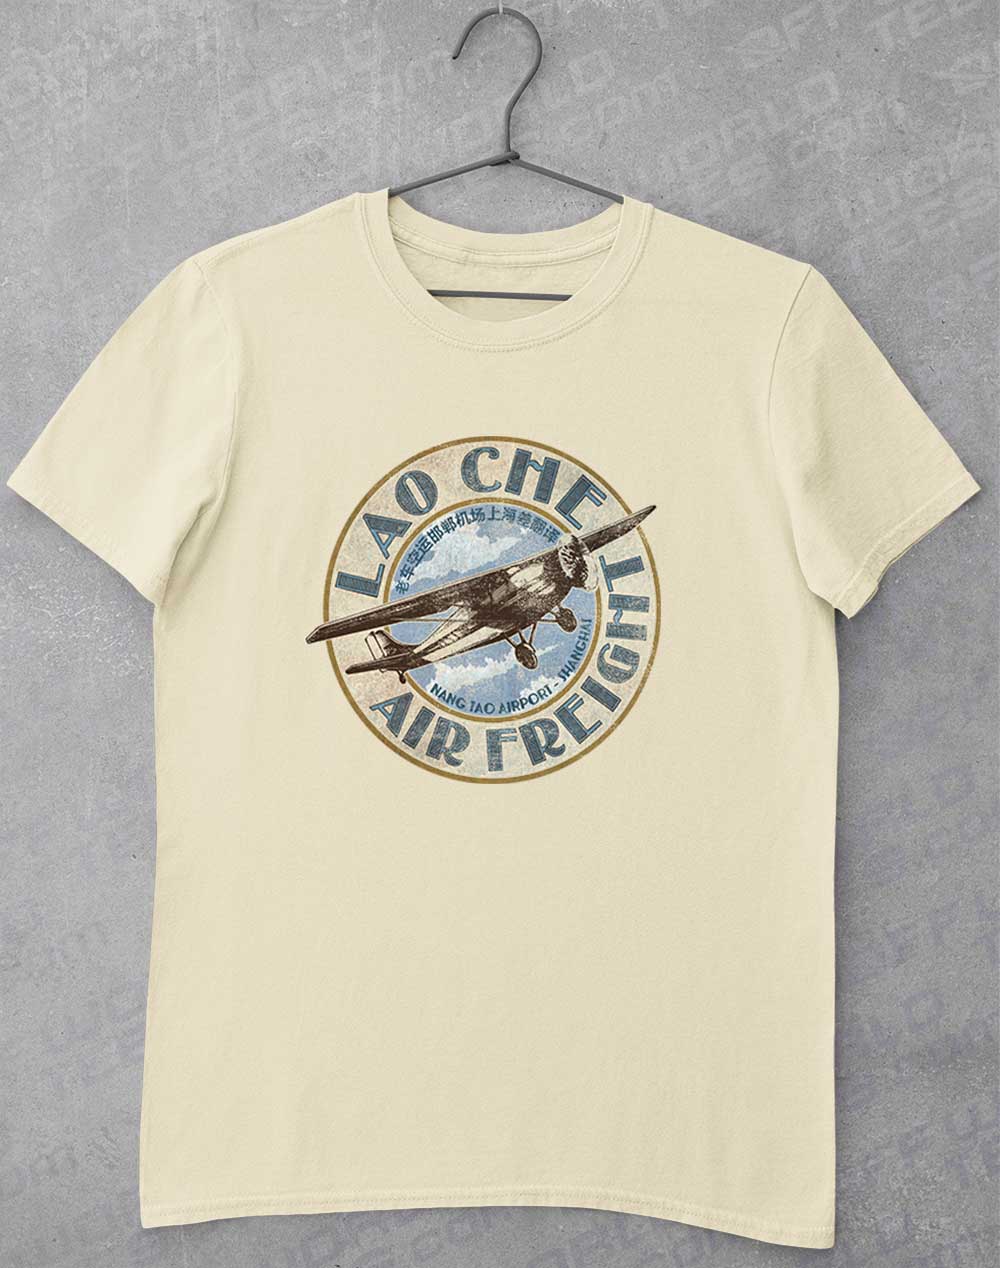 Natural - Lao Che Air Freight T-Shirt